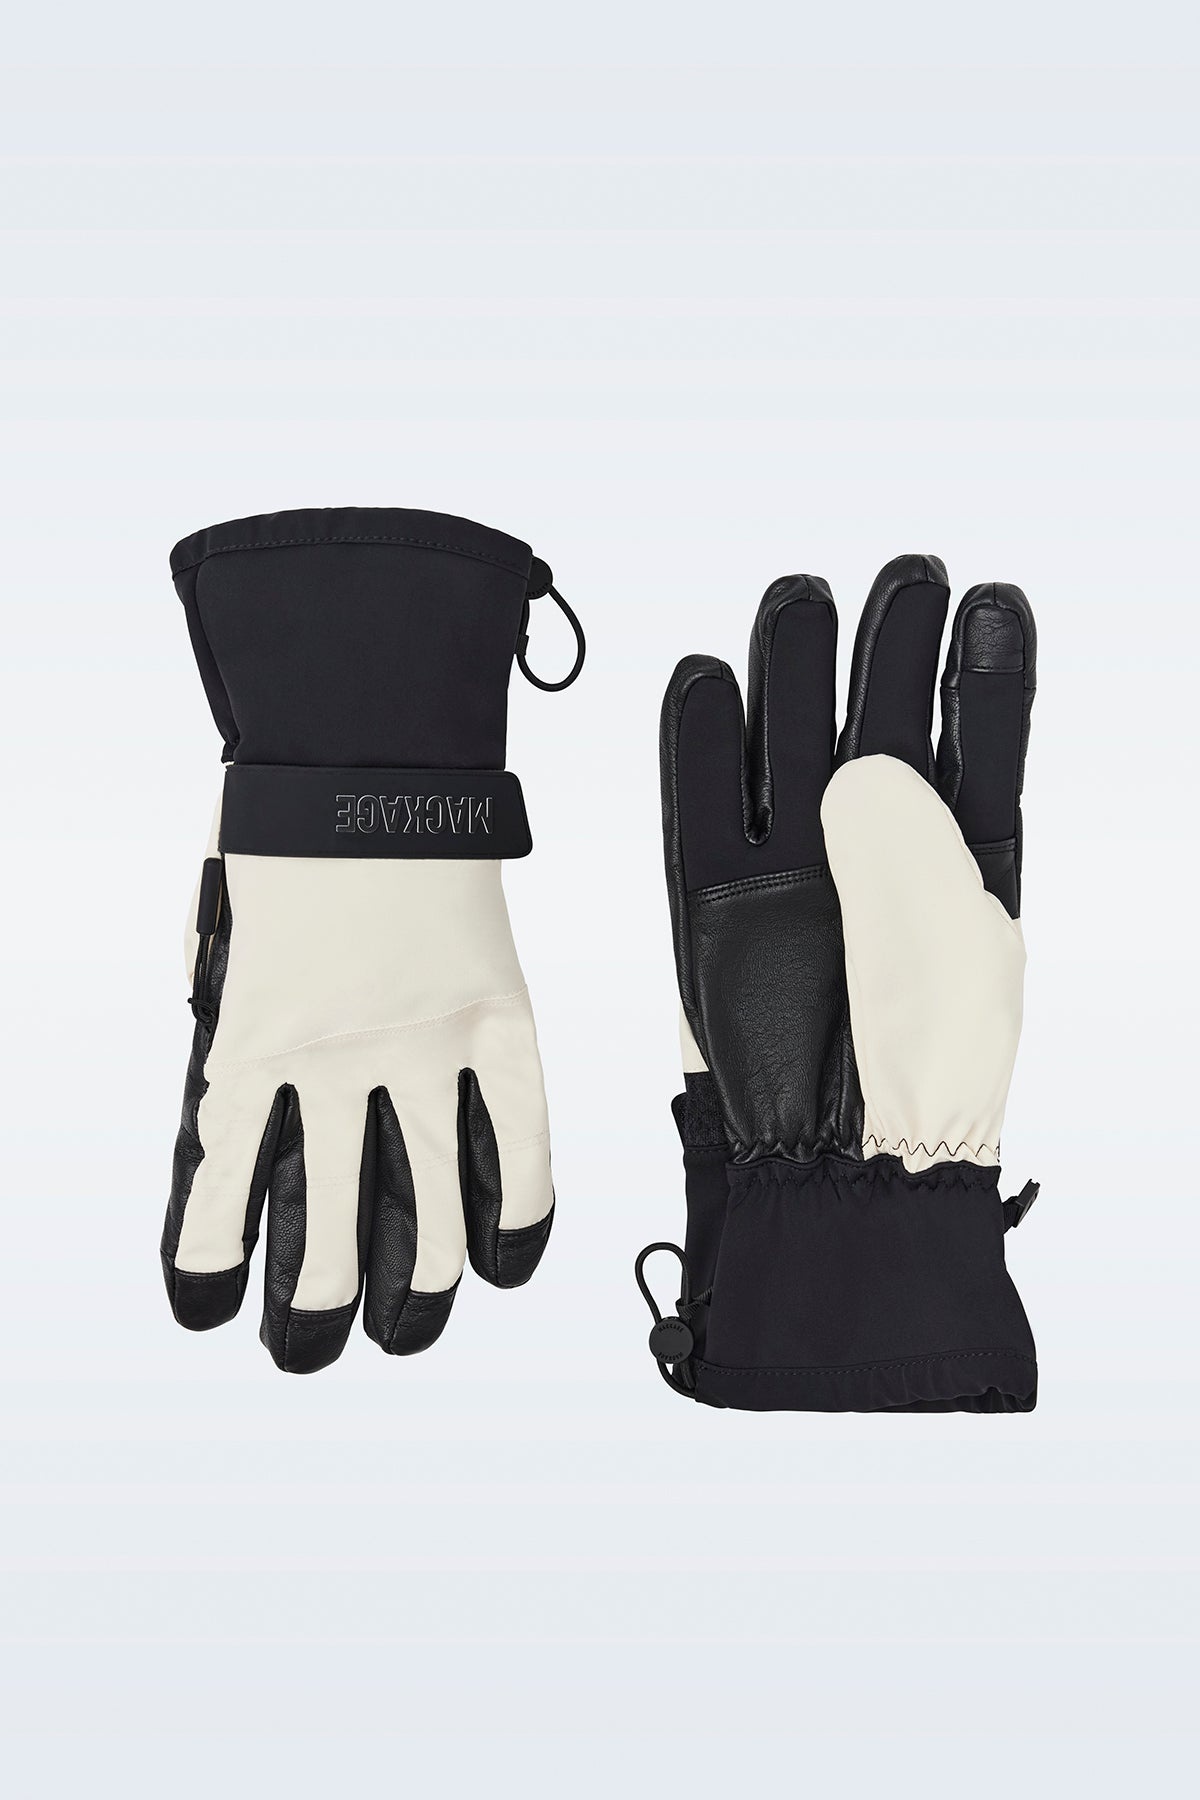 SWYFT 2-layer technical ski gloves - 2